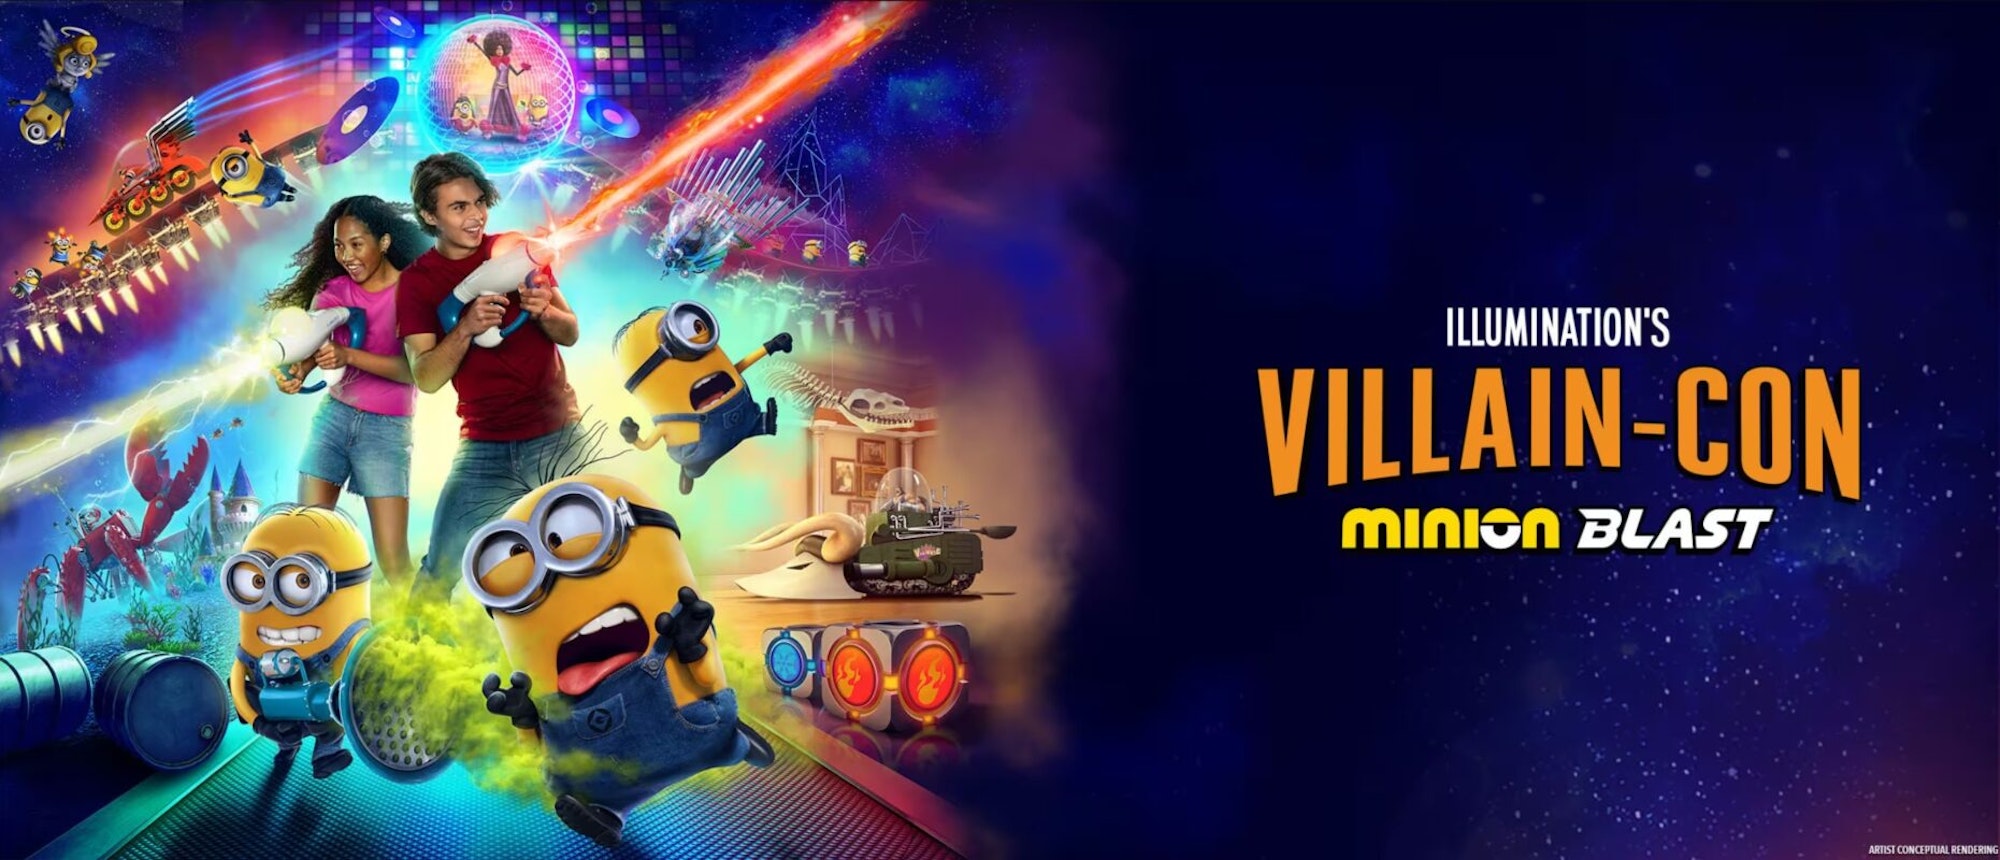 Cover Image for Illumination’s Villain-Con Minion Blast Opens for Guest Previews